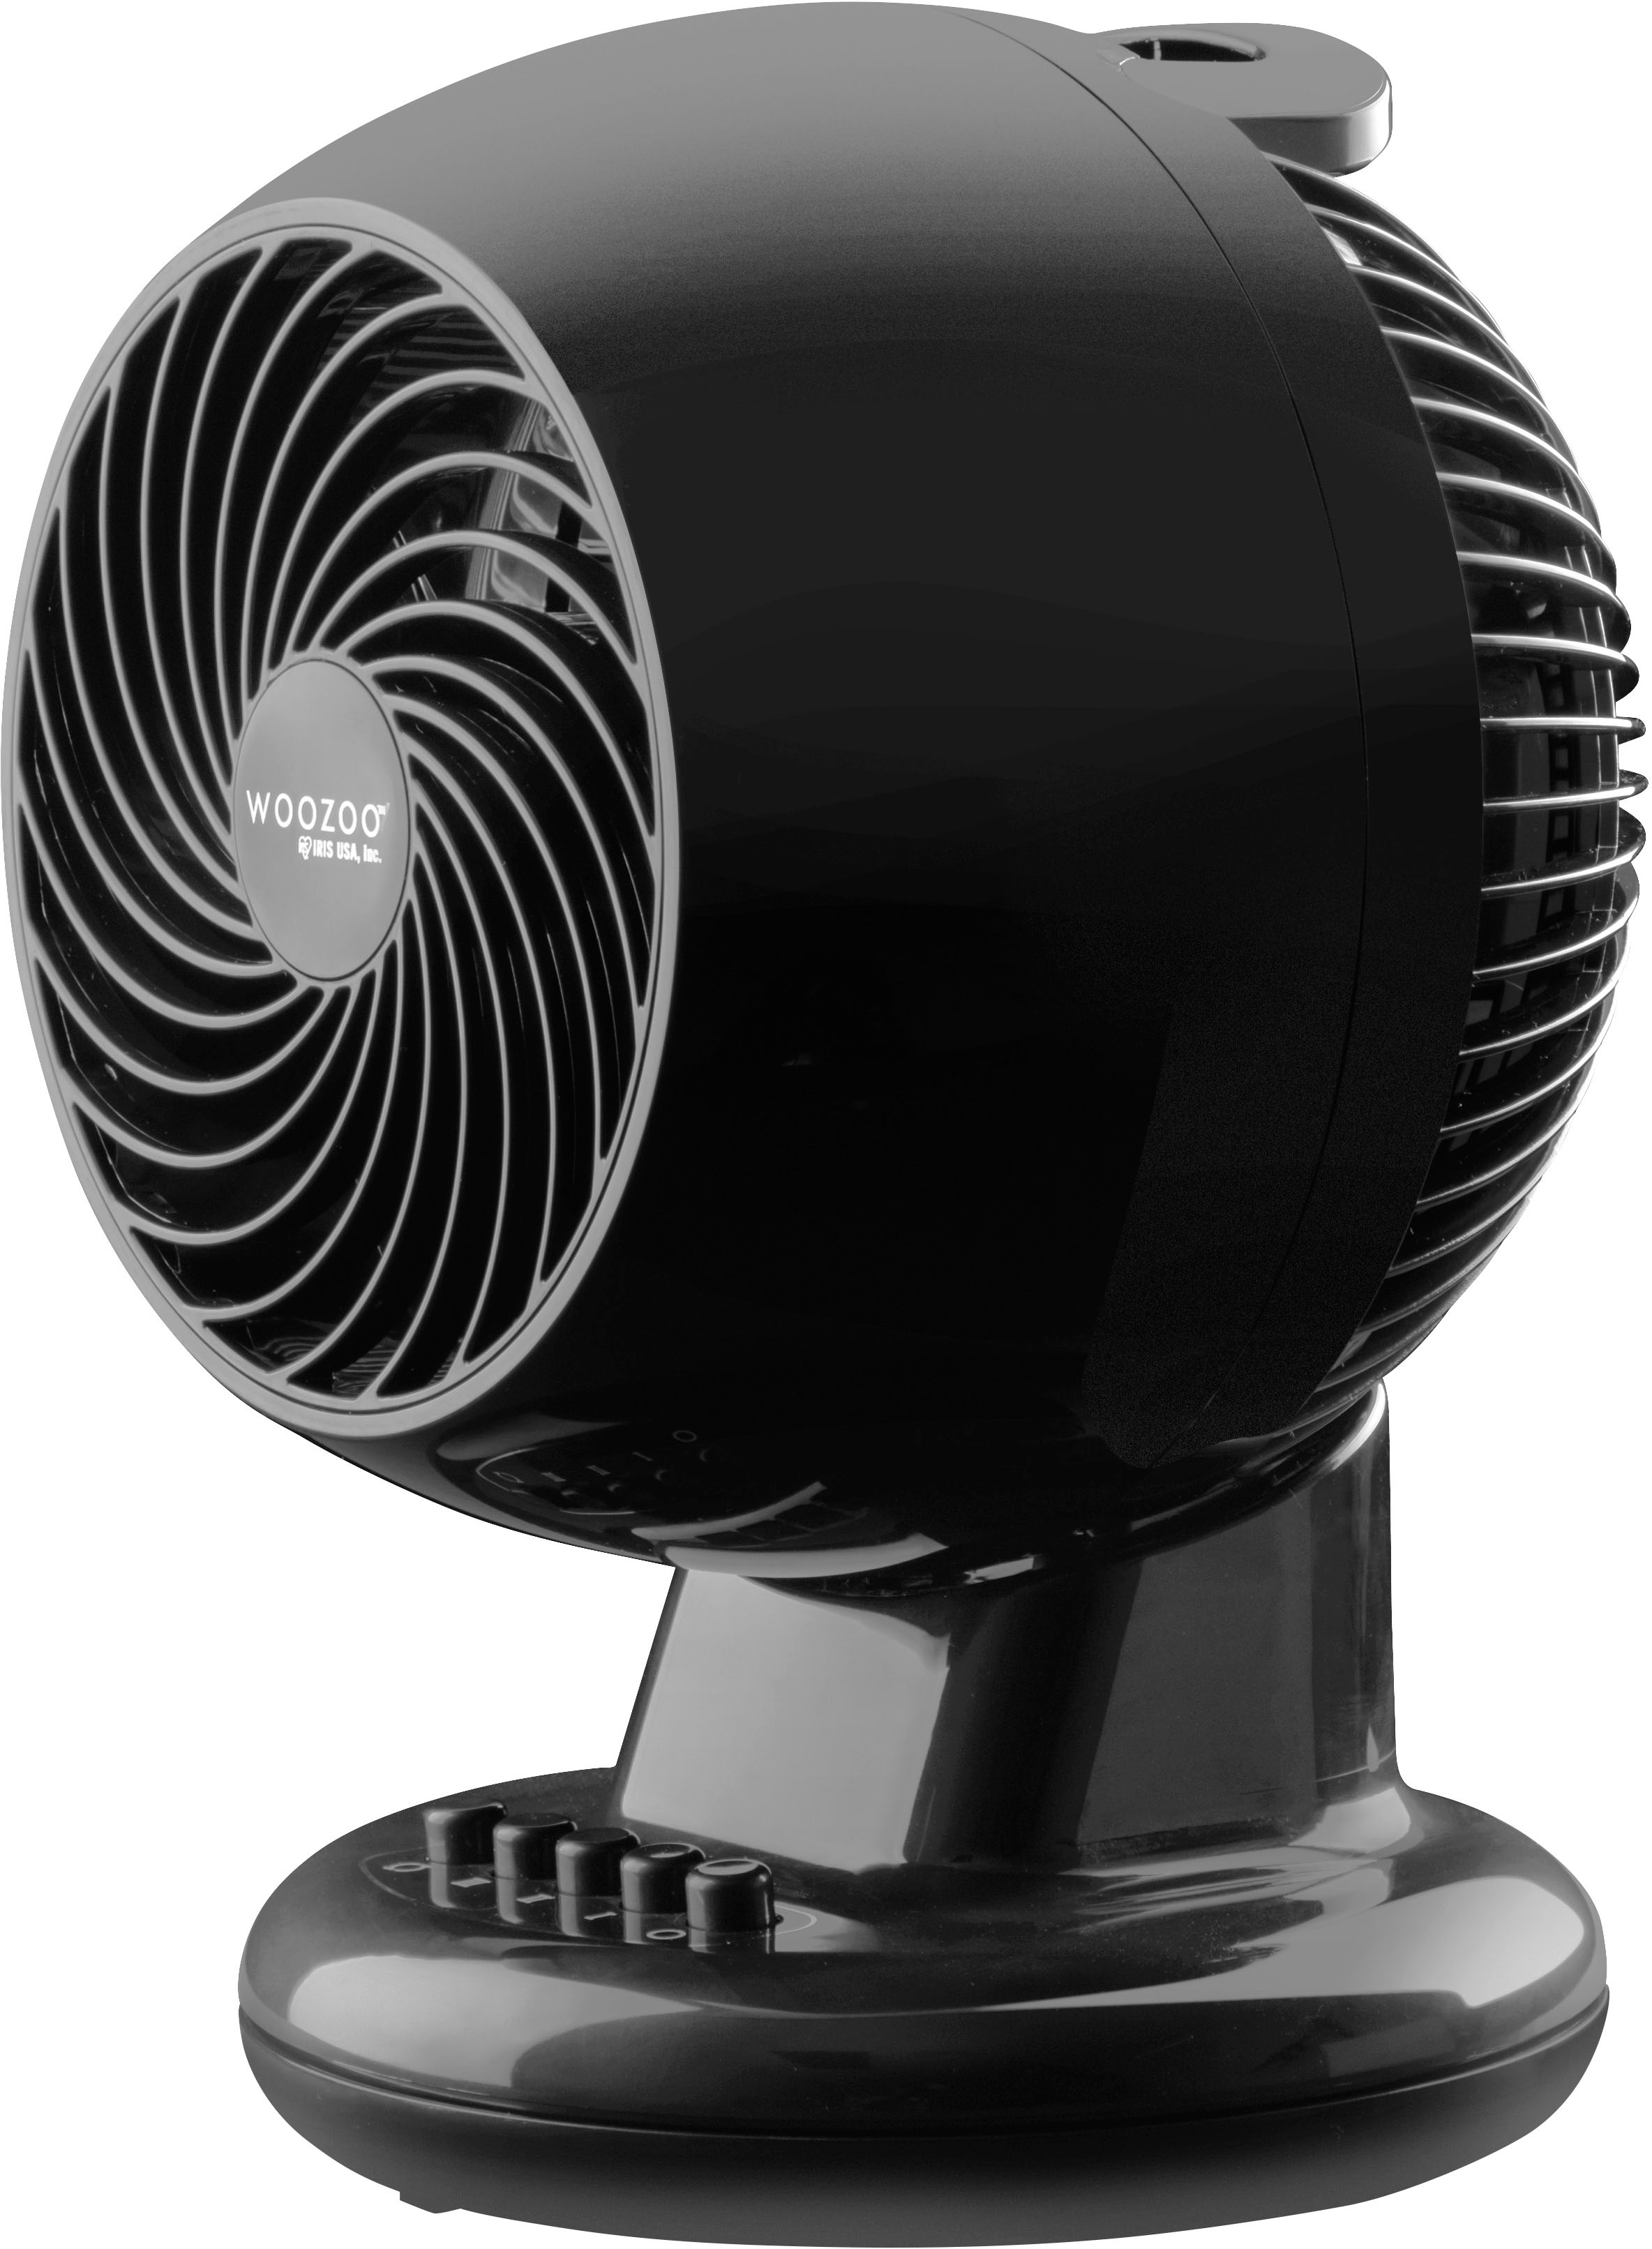 Angle View: Woozoo - Compact Personal Oscillating Fan - Black